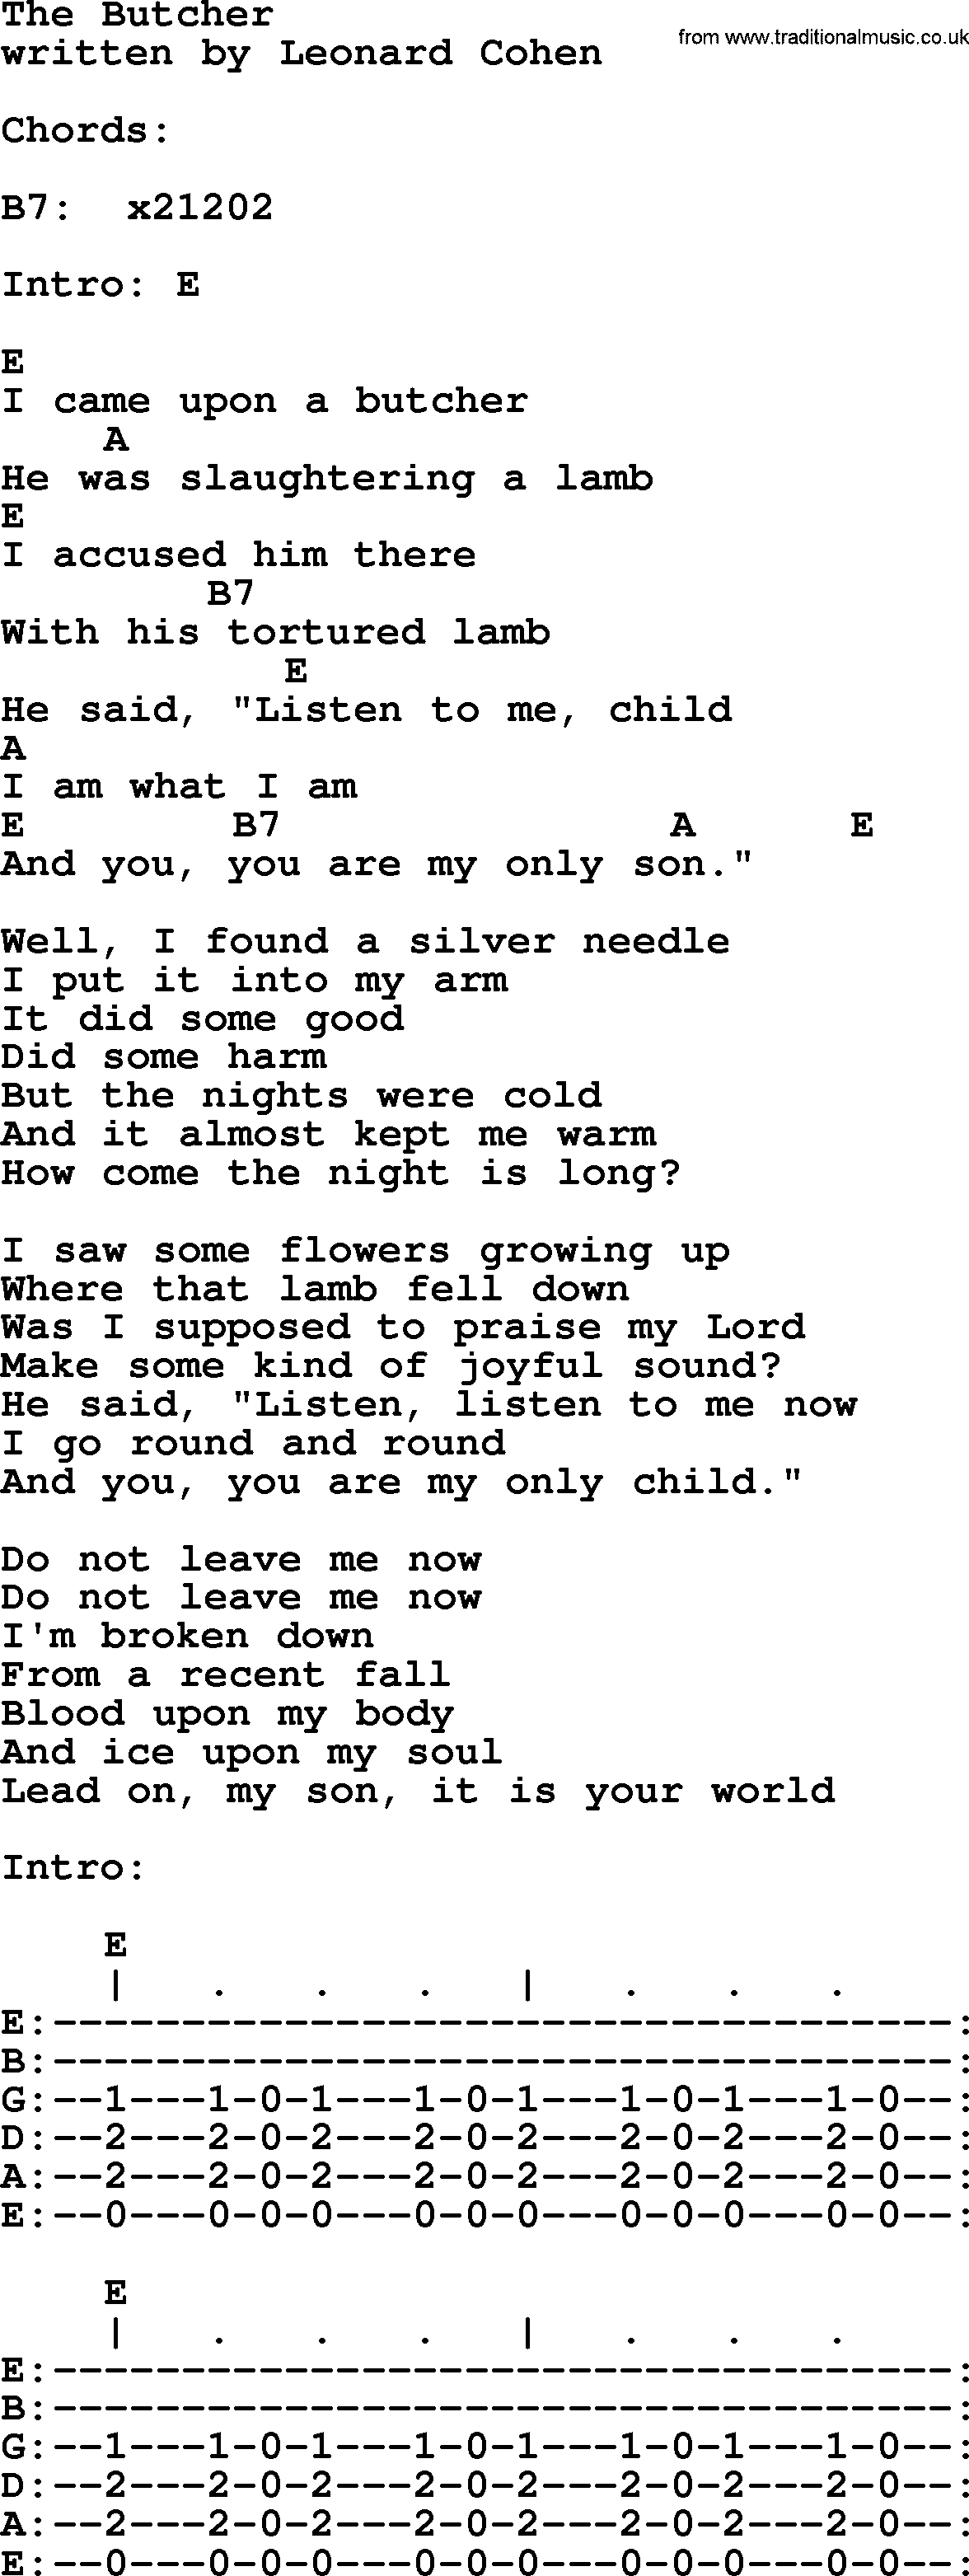 Leonard Cohen song The Butcher, lyrics and chords